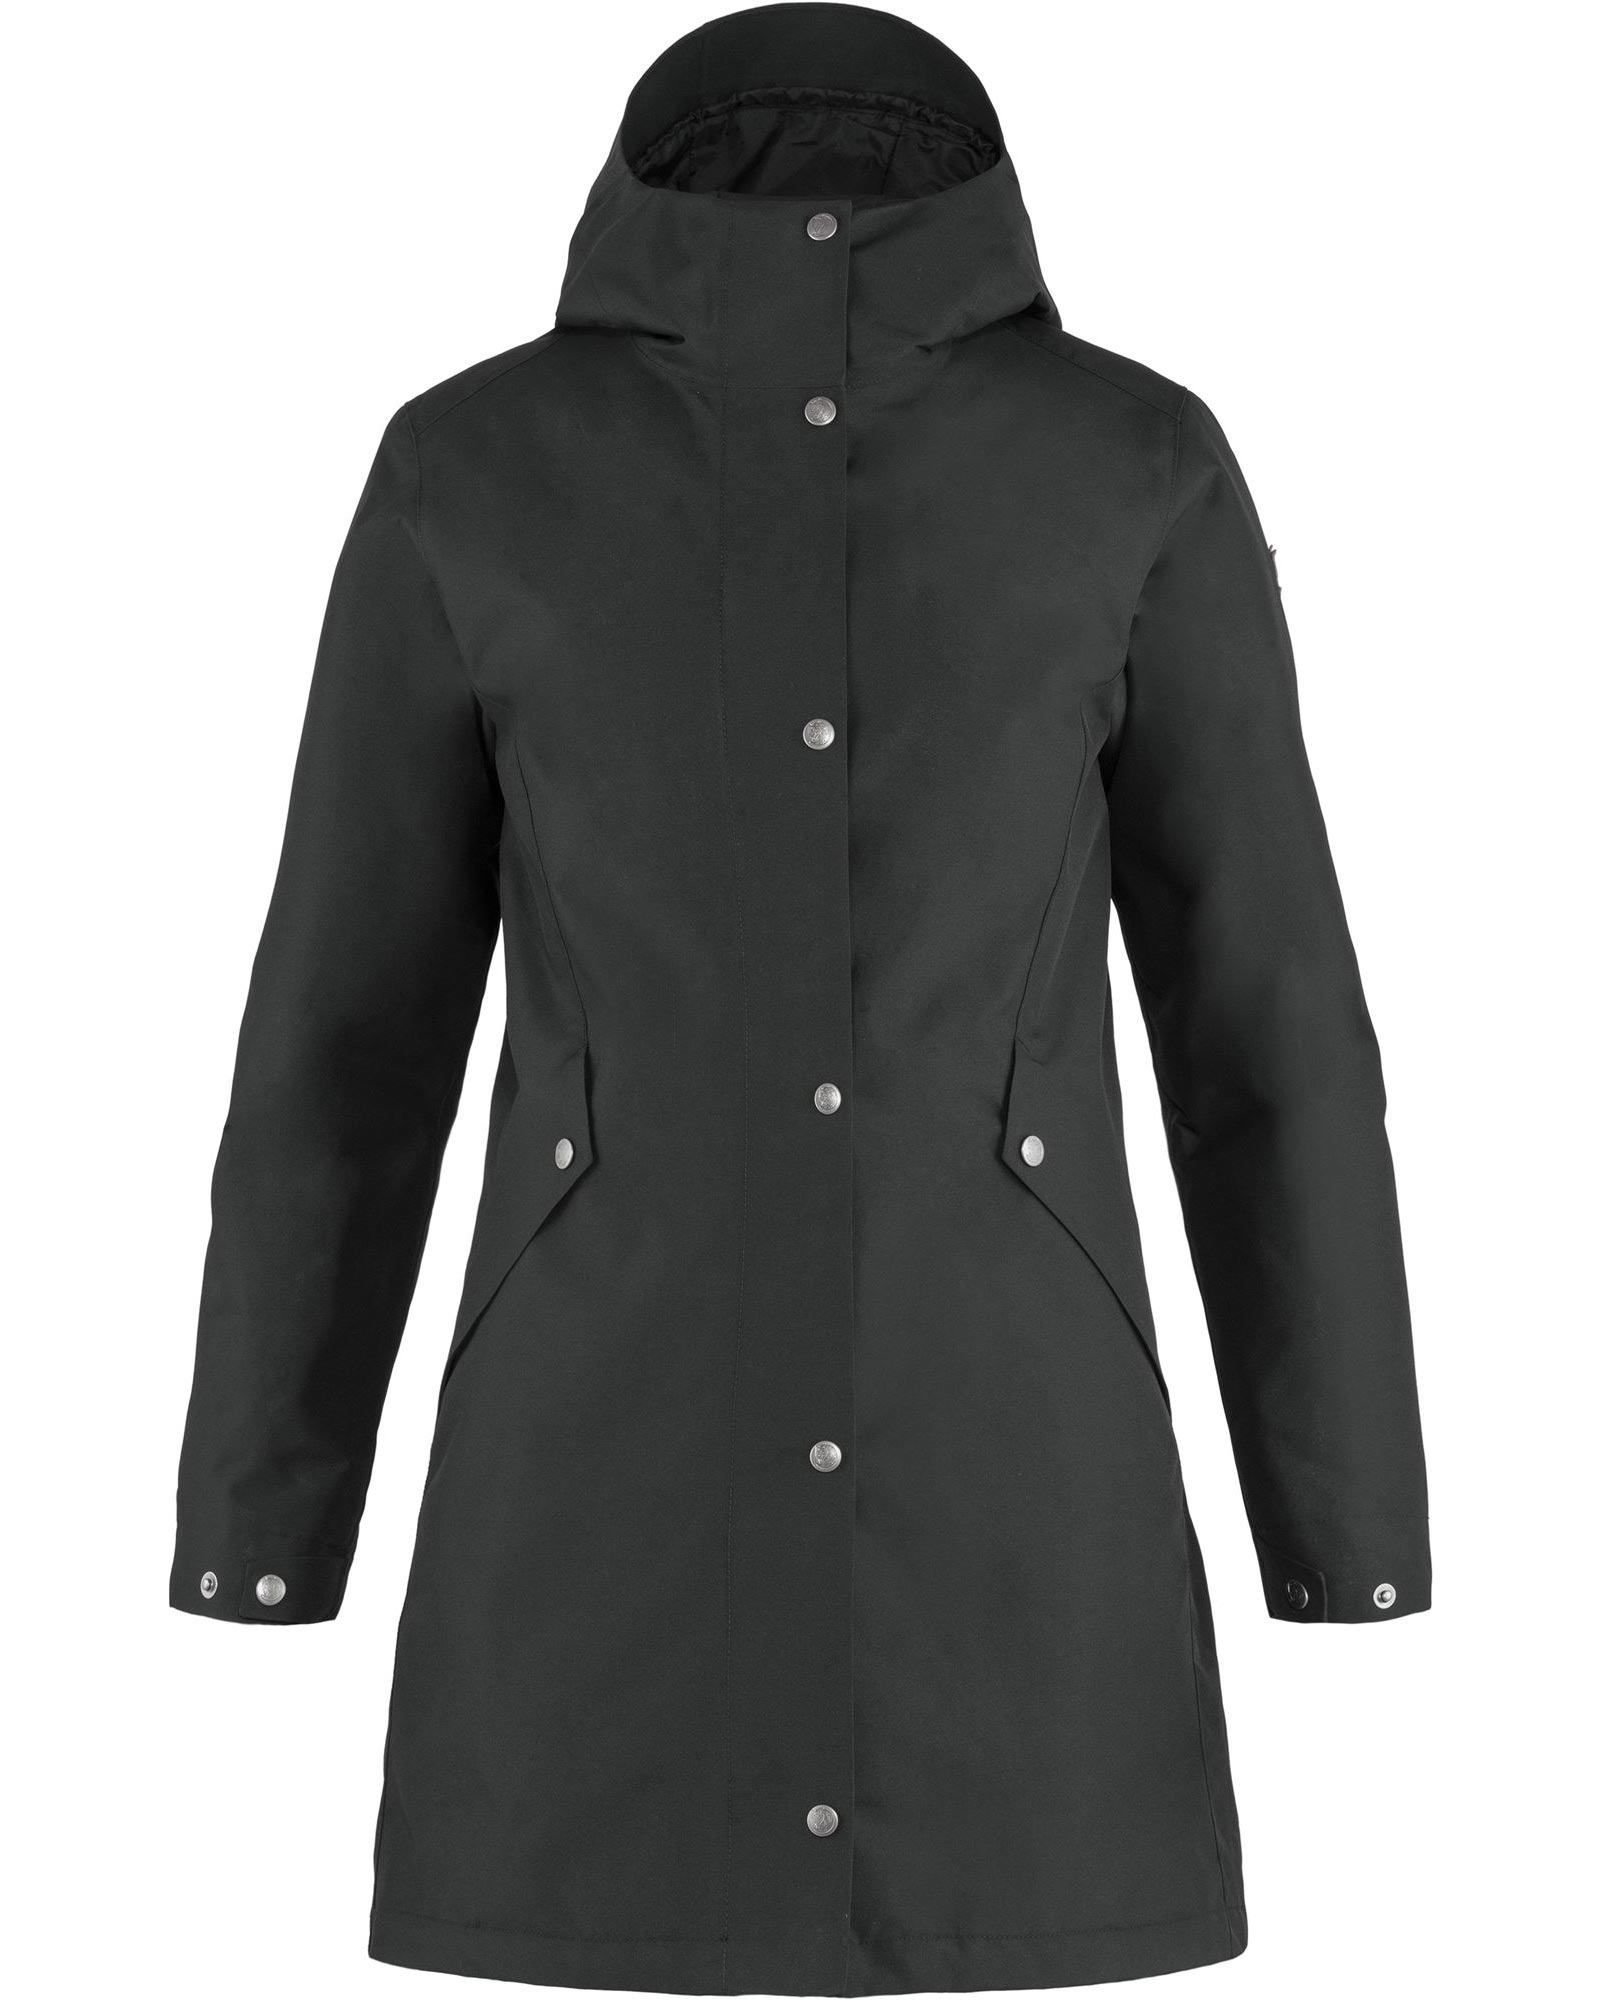 Fjallraven Visby Women’s 3 in 1 Jacket - black XS